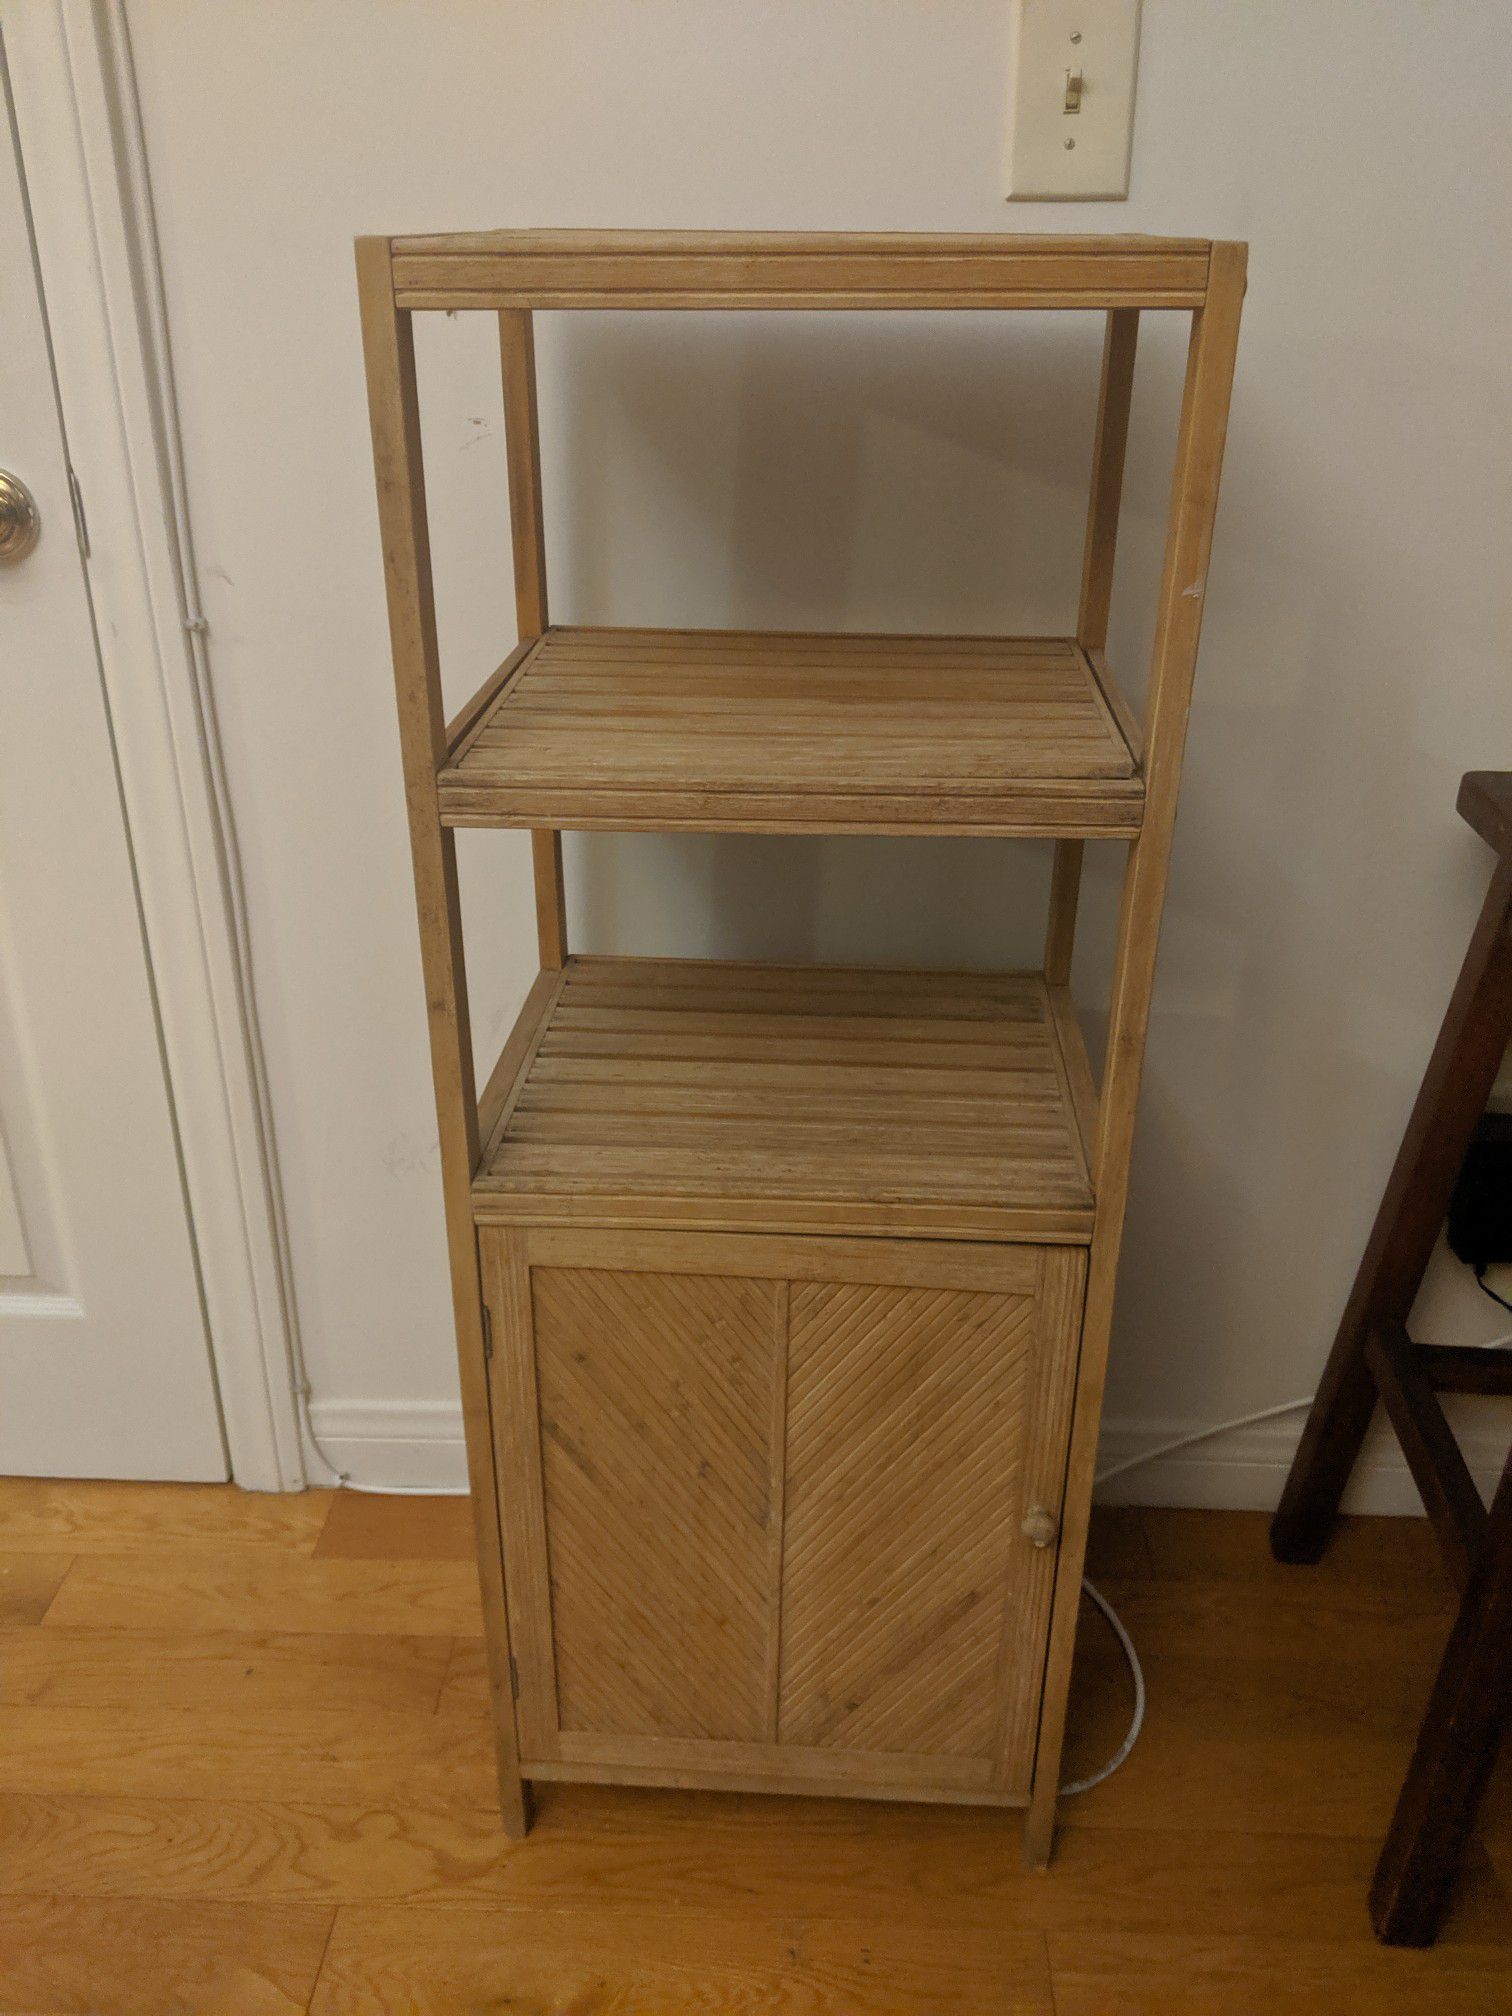 Cabinet/Shelf Unit